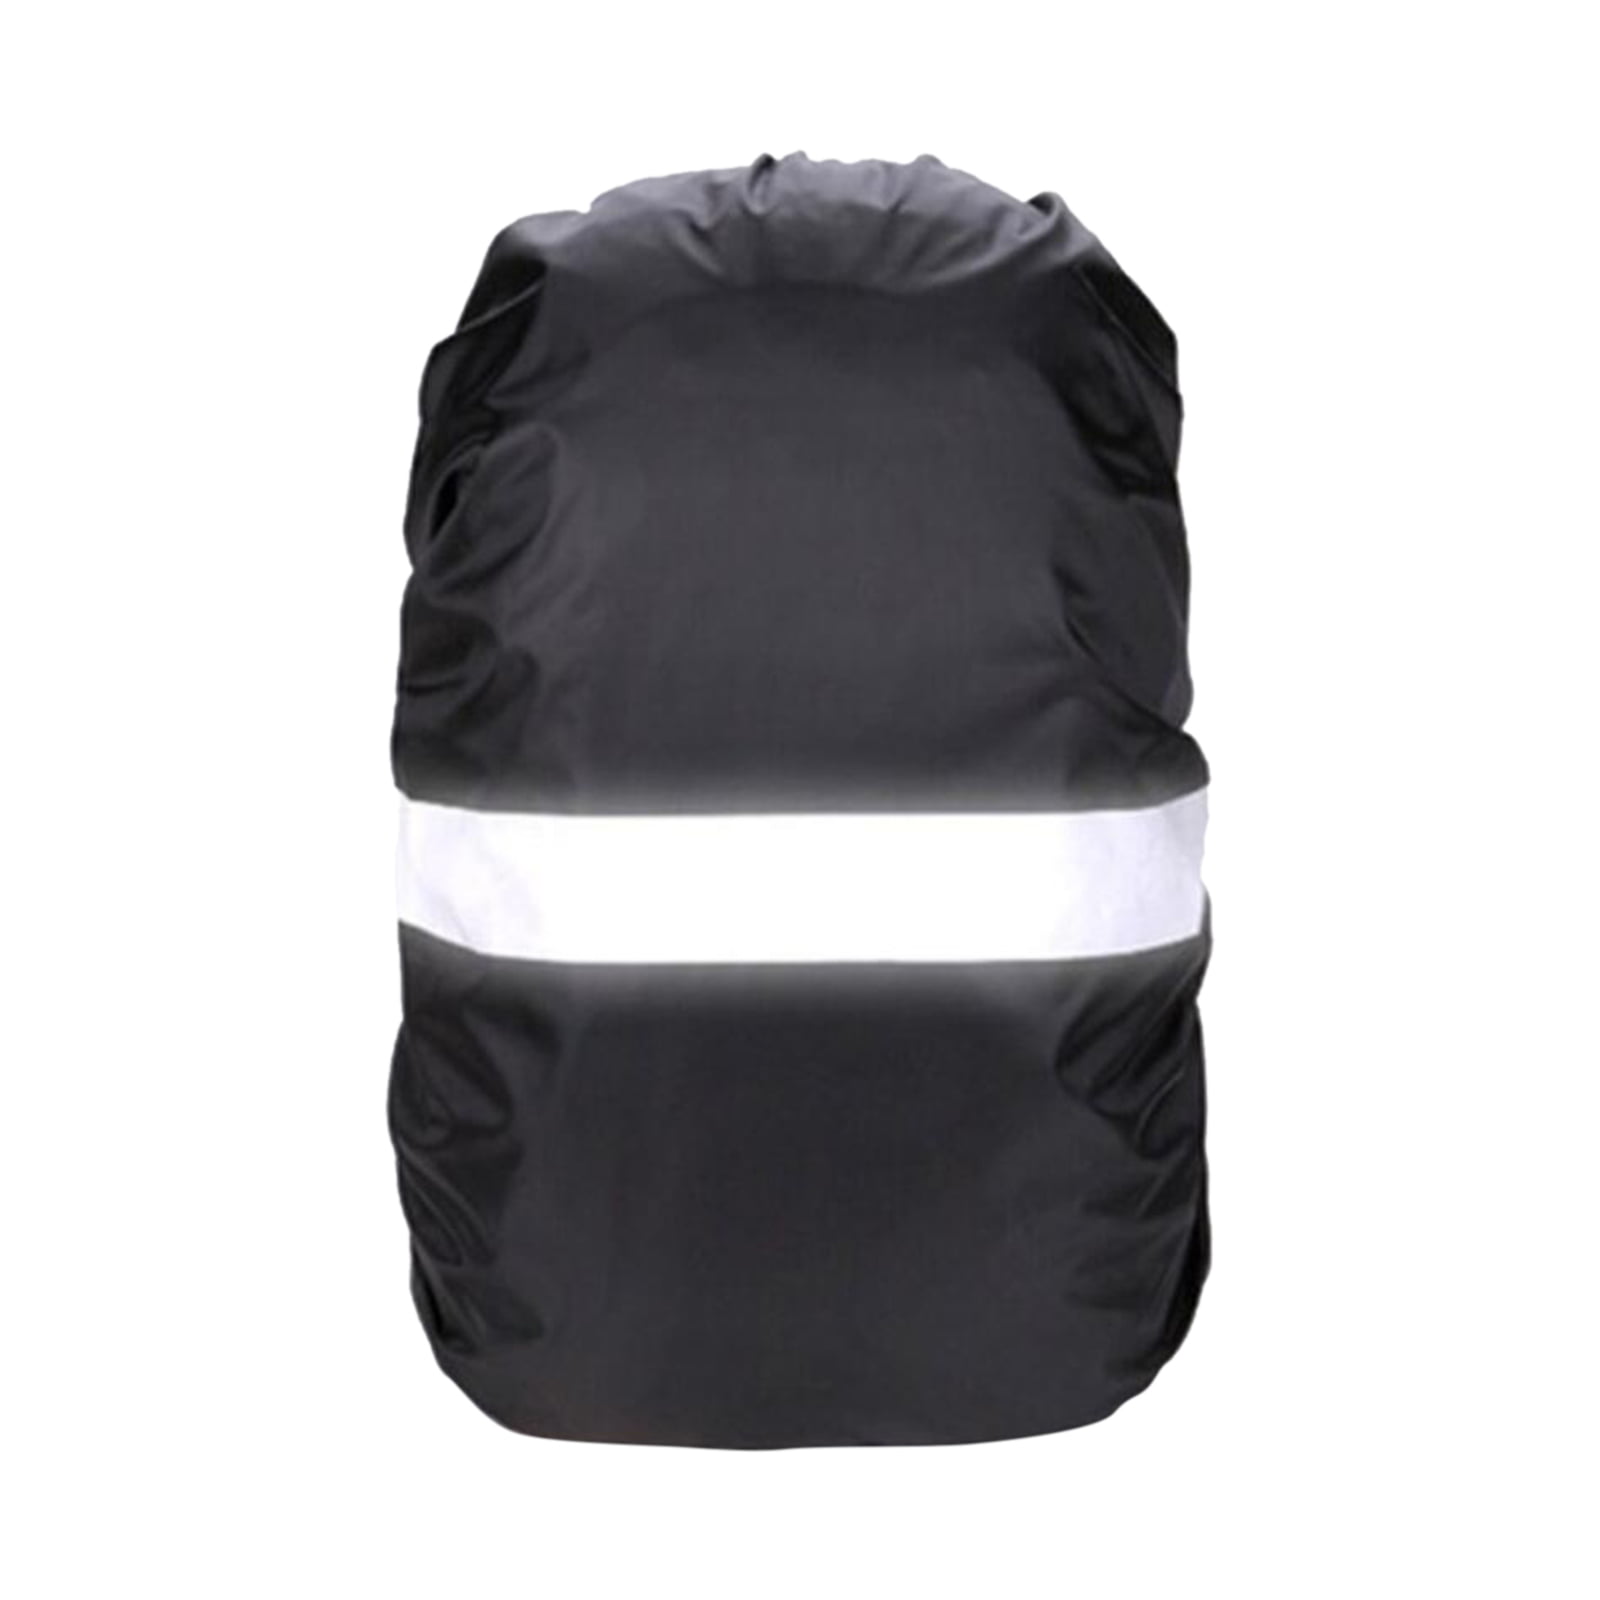 Backpack cover Rain Reflective Rucksacks Travel Waterproof For Camping 